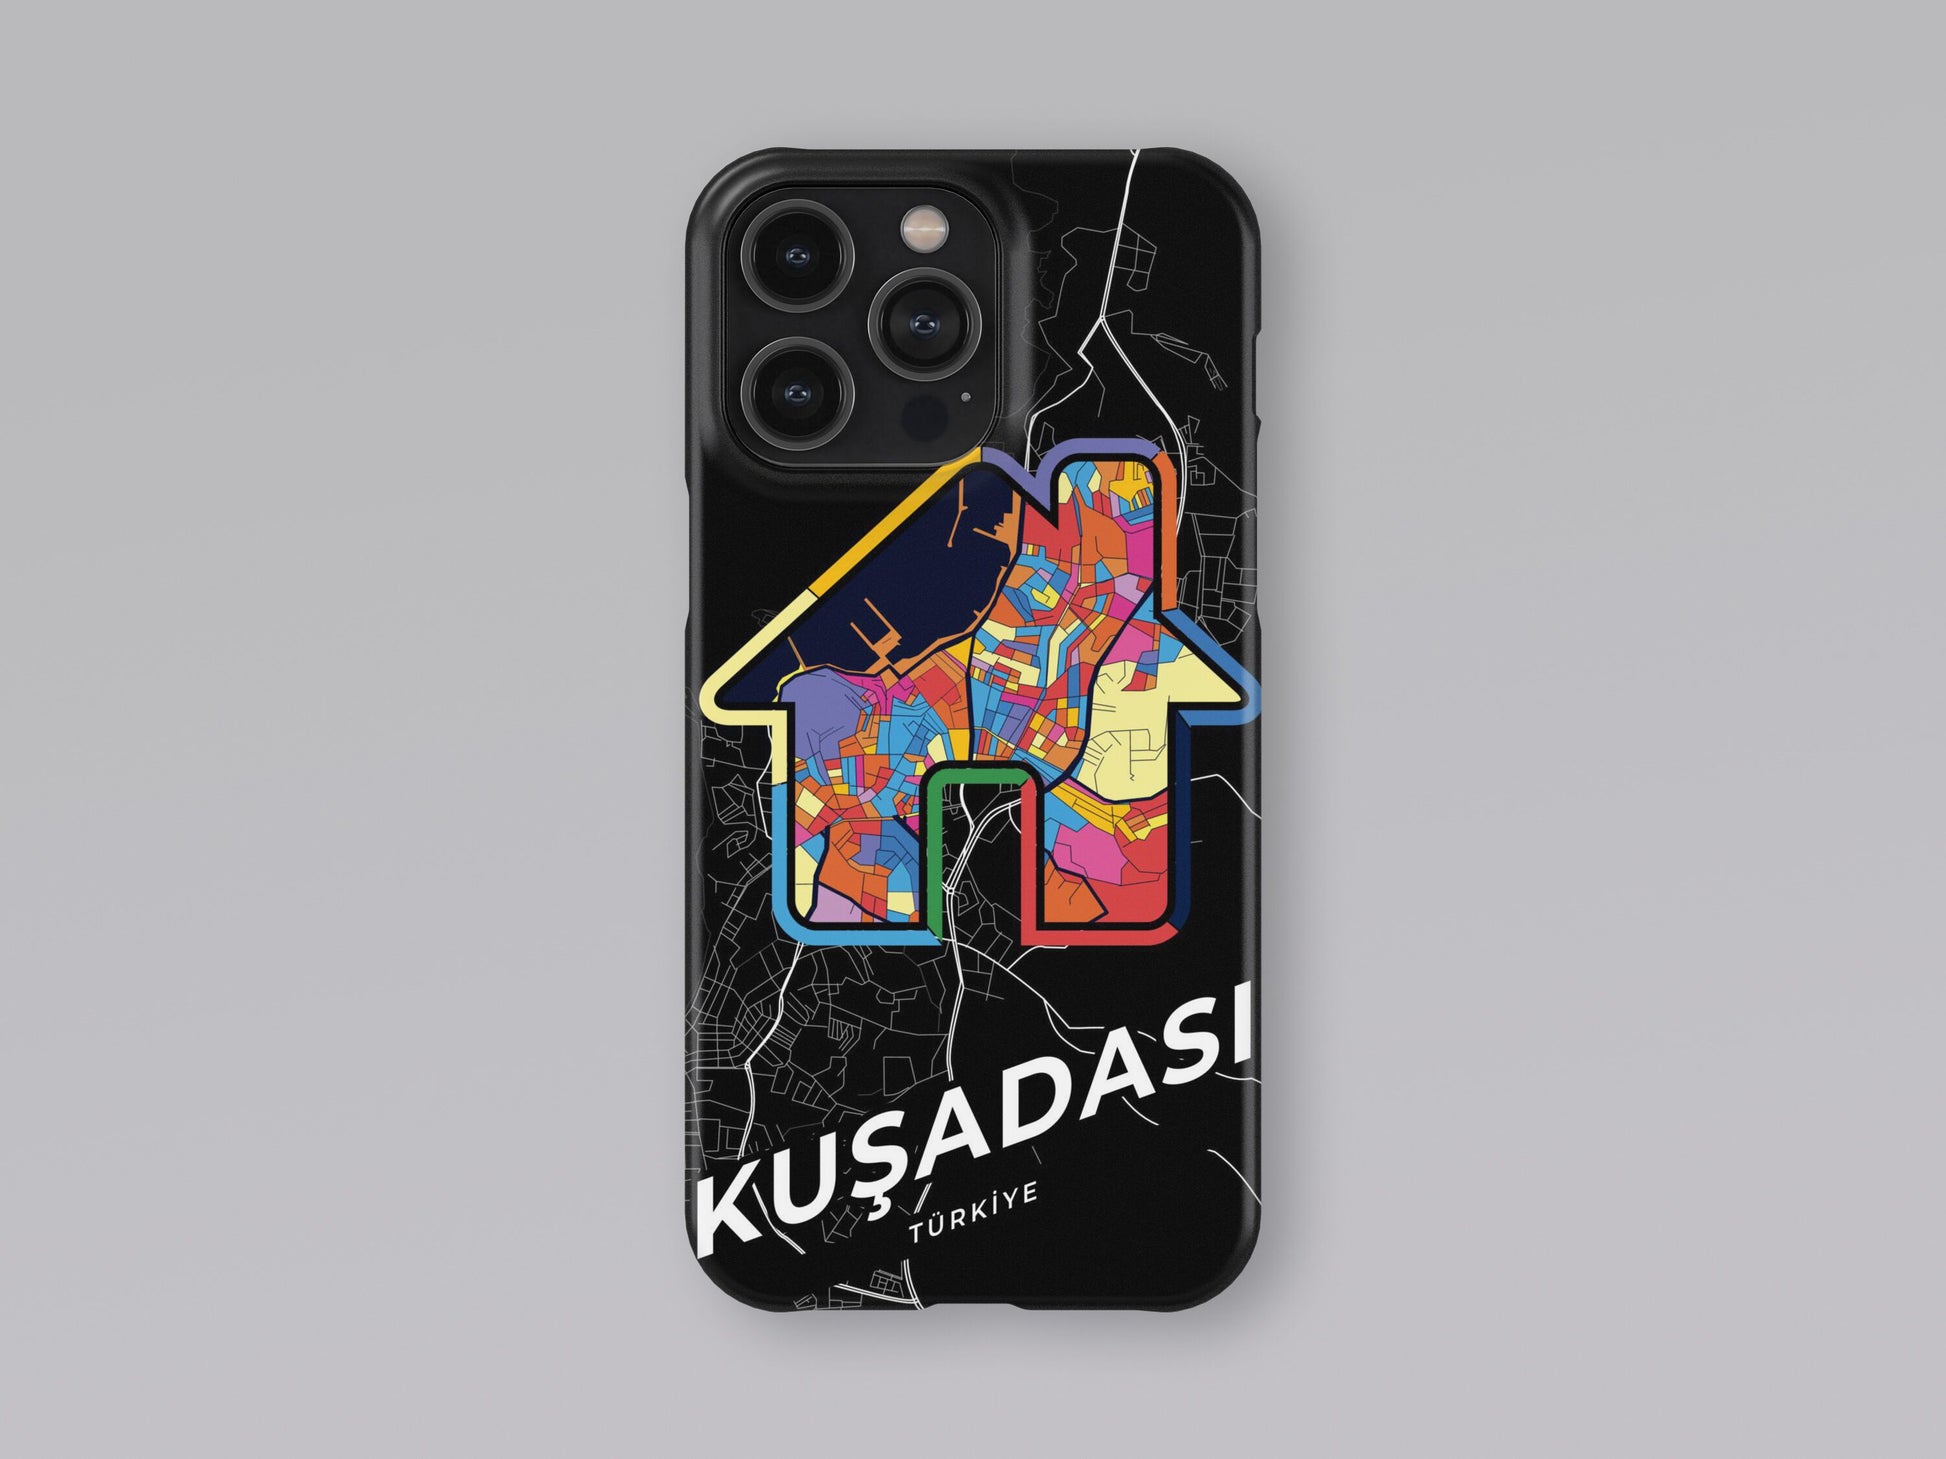 Kuşadası Turkey slim phone case with colorful icon. Birthday, wedding or housewarming gift. Couple match cases. 3